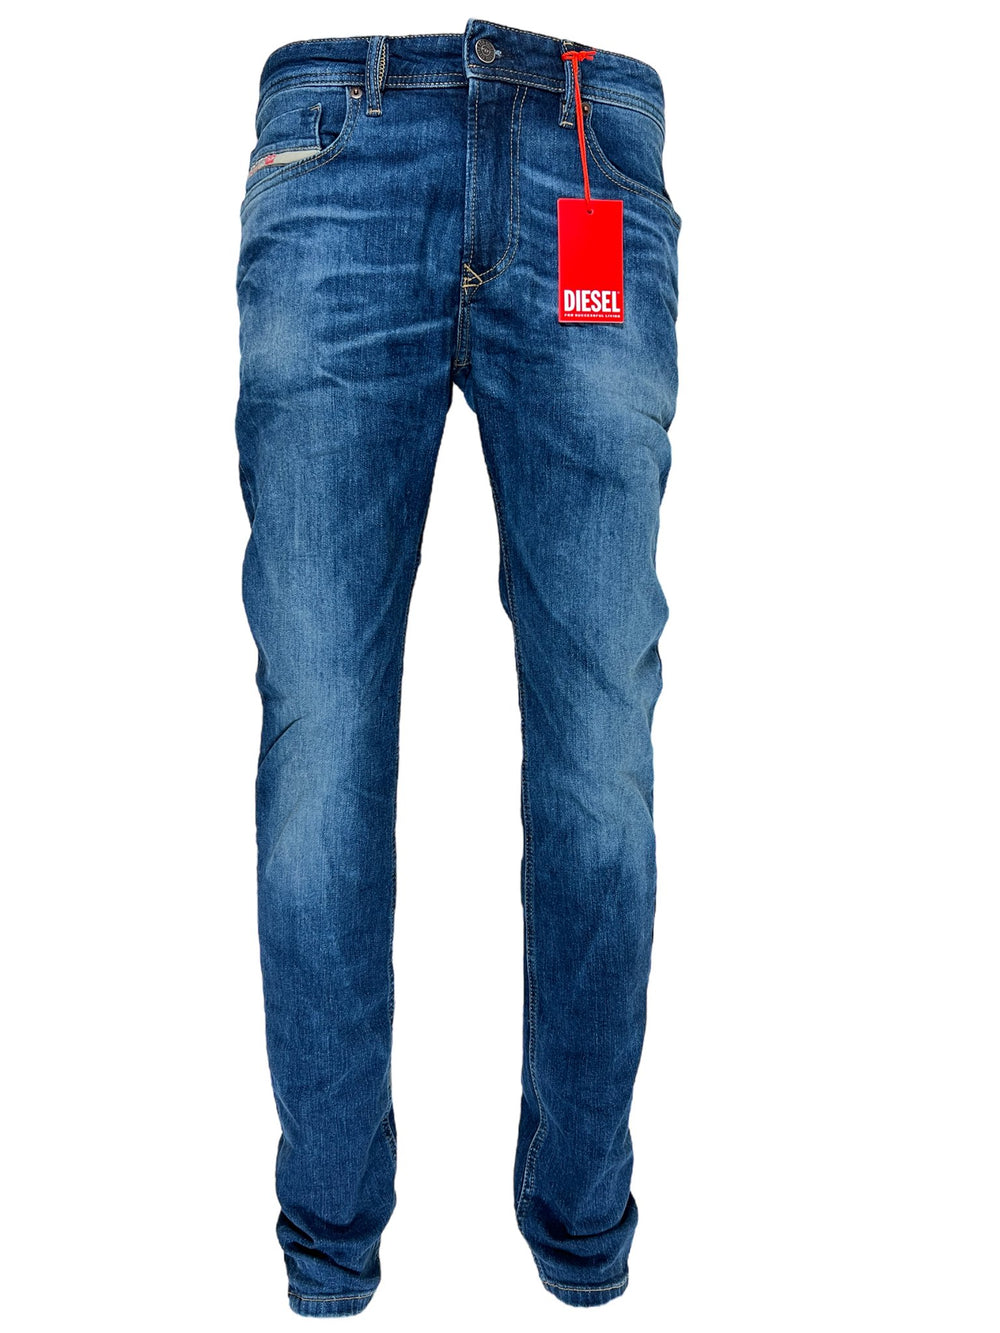 A pair of DIESEL 1979 SLEENKER PFAU DENIM jeans with a red tag on them.